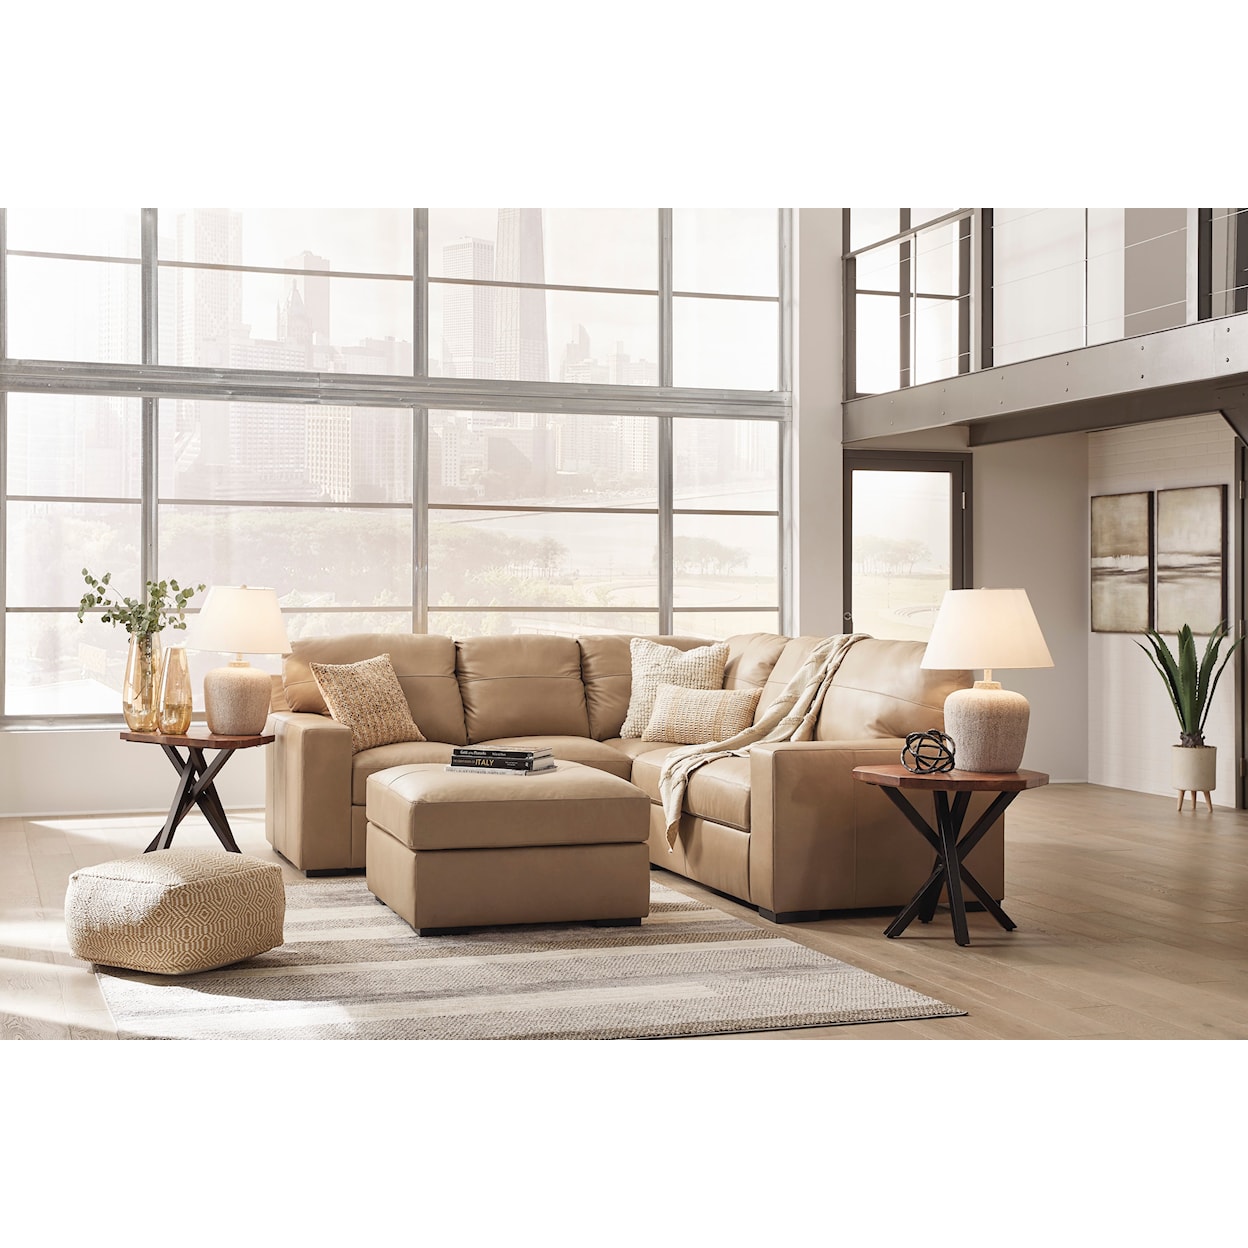 Benchcraft Bandon Living Room Set